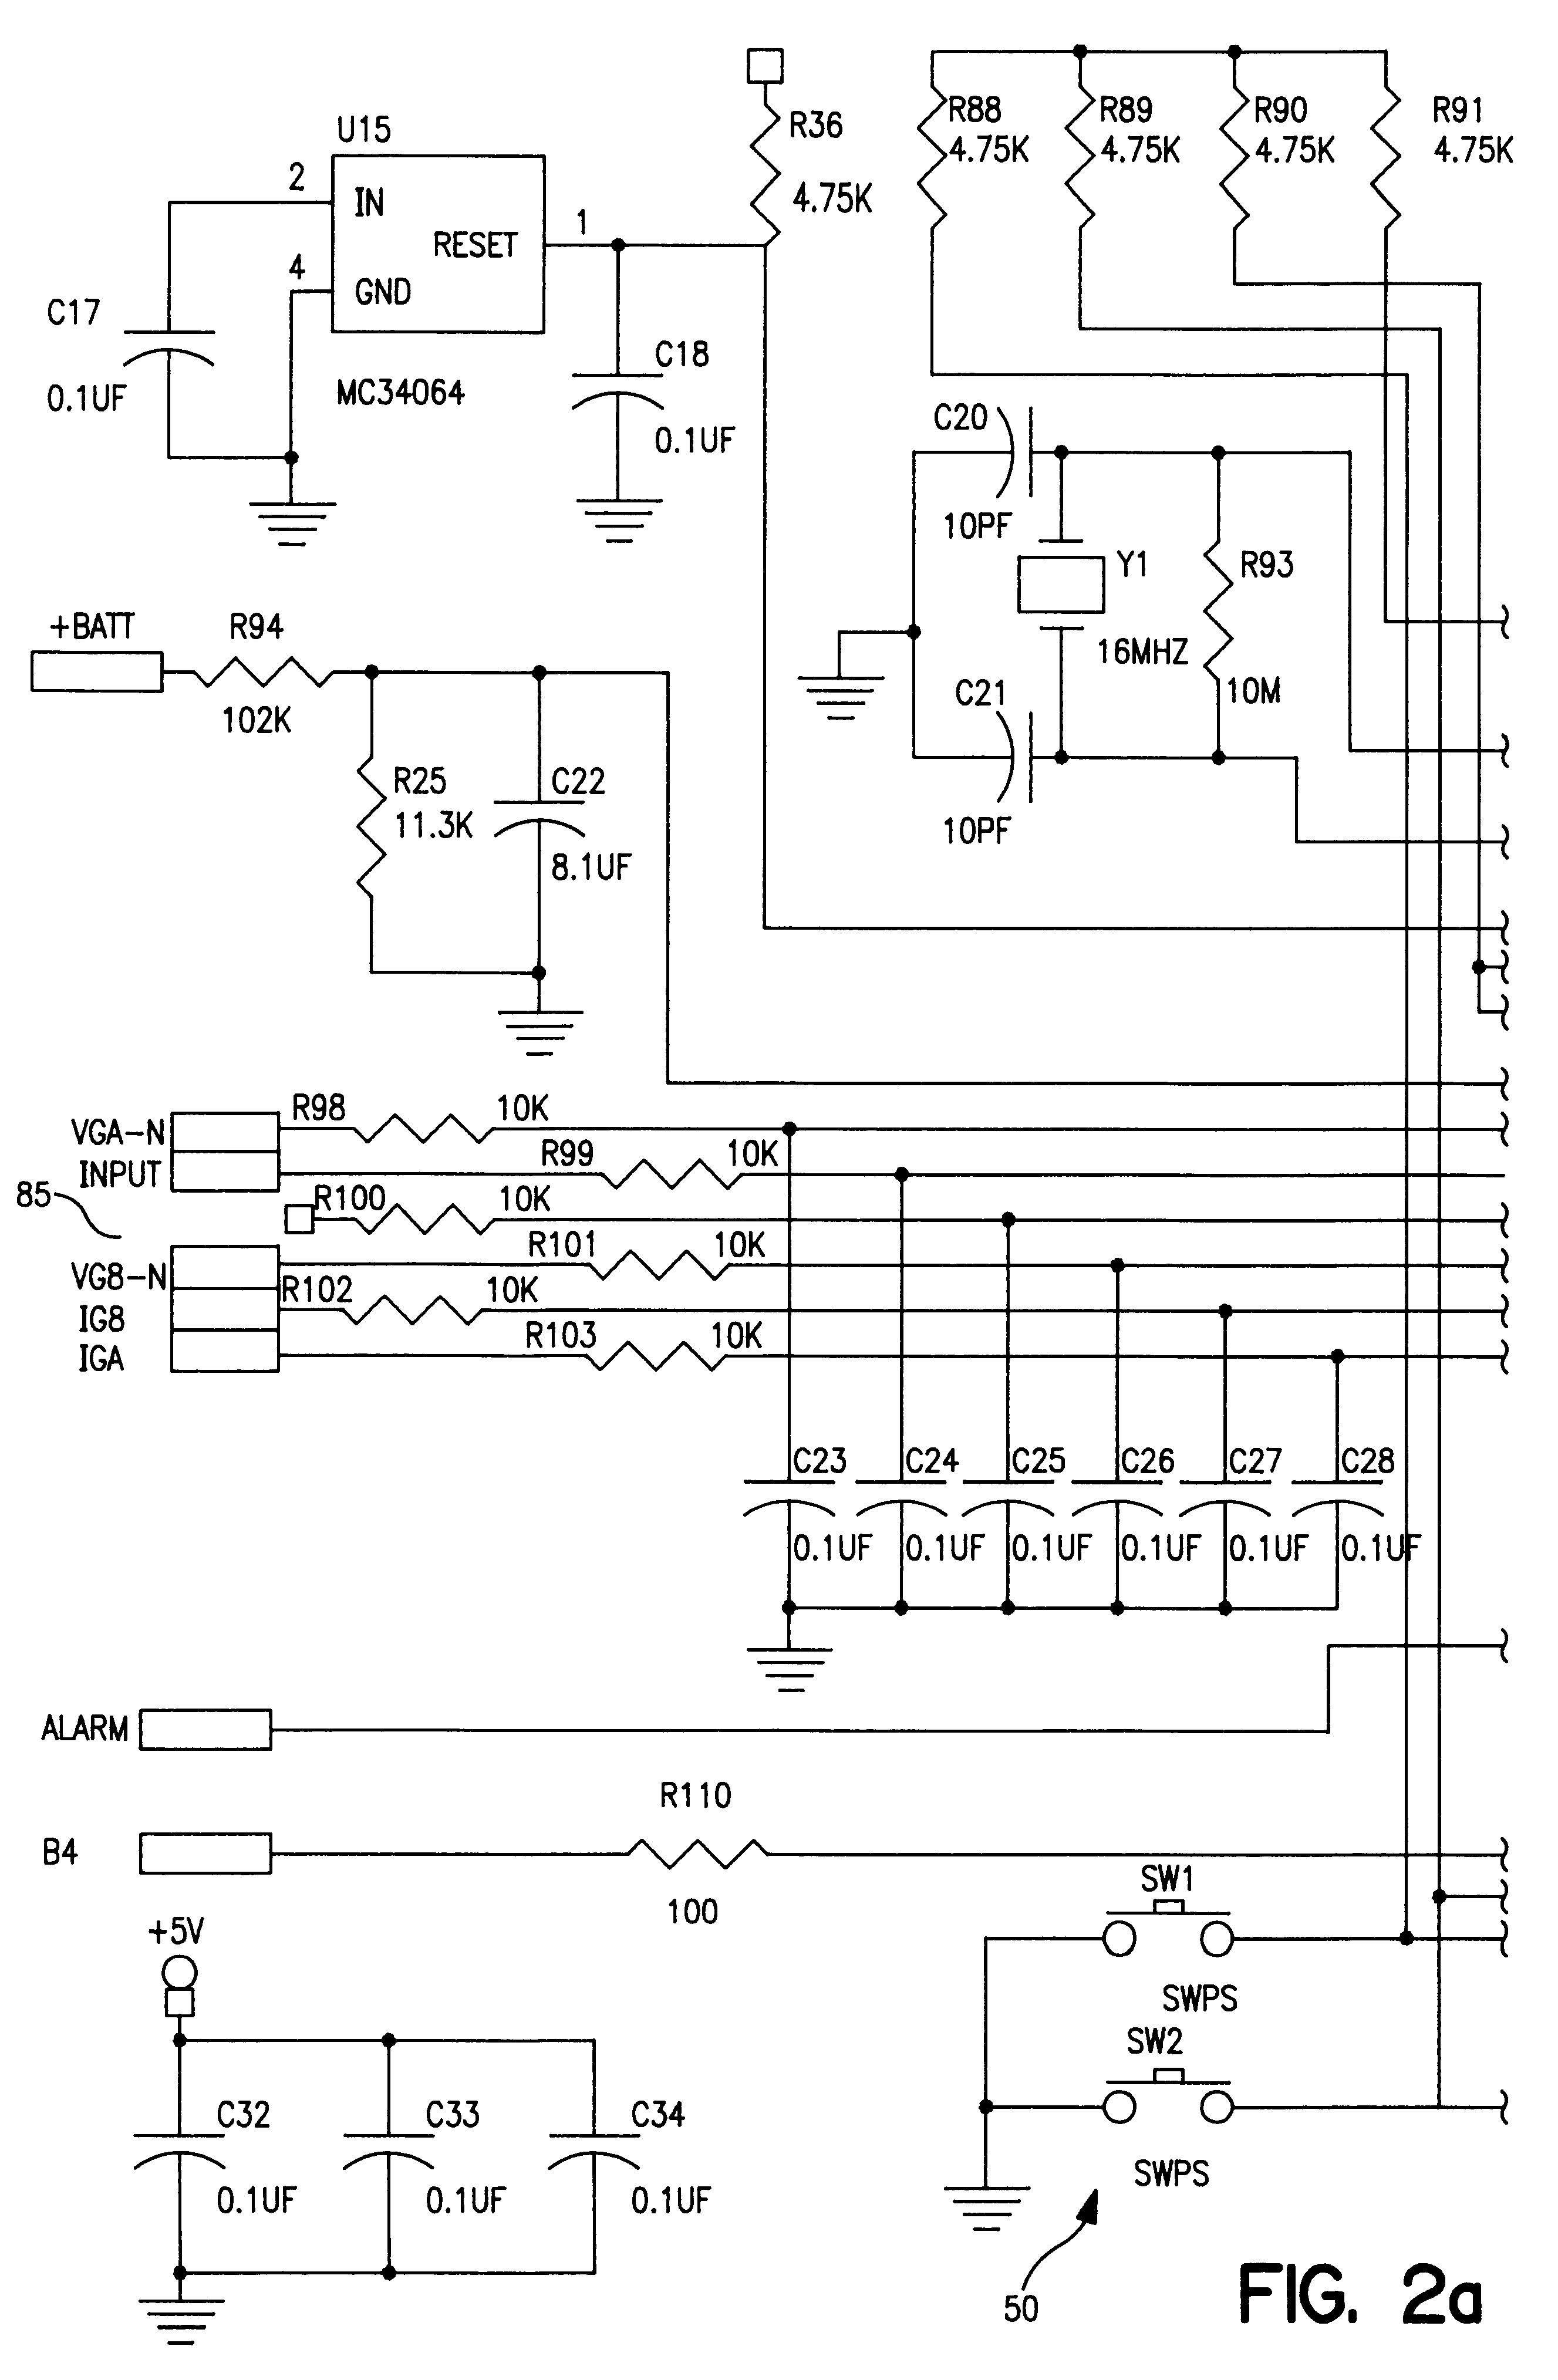 Generator Transfer Switch Wiring Diagram Generac Transfer Switch Wiring Diagram Gif Throughout Generator Of Generator Transfer Switch Wiring Diagram